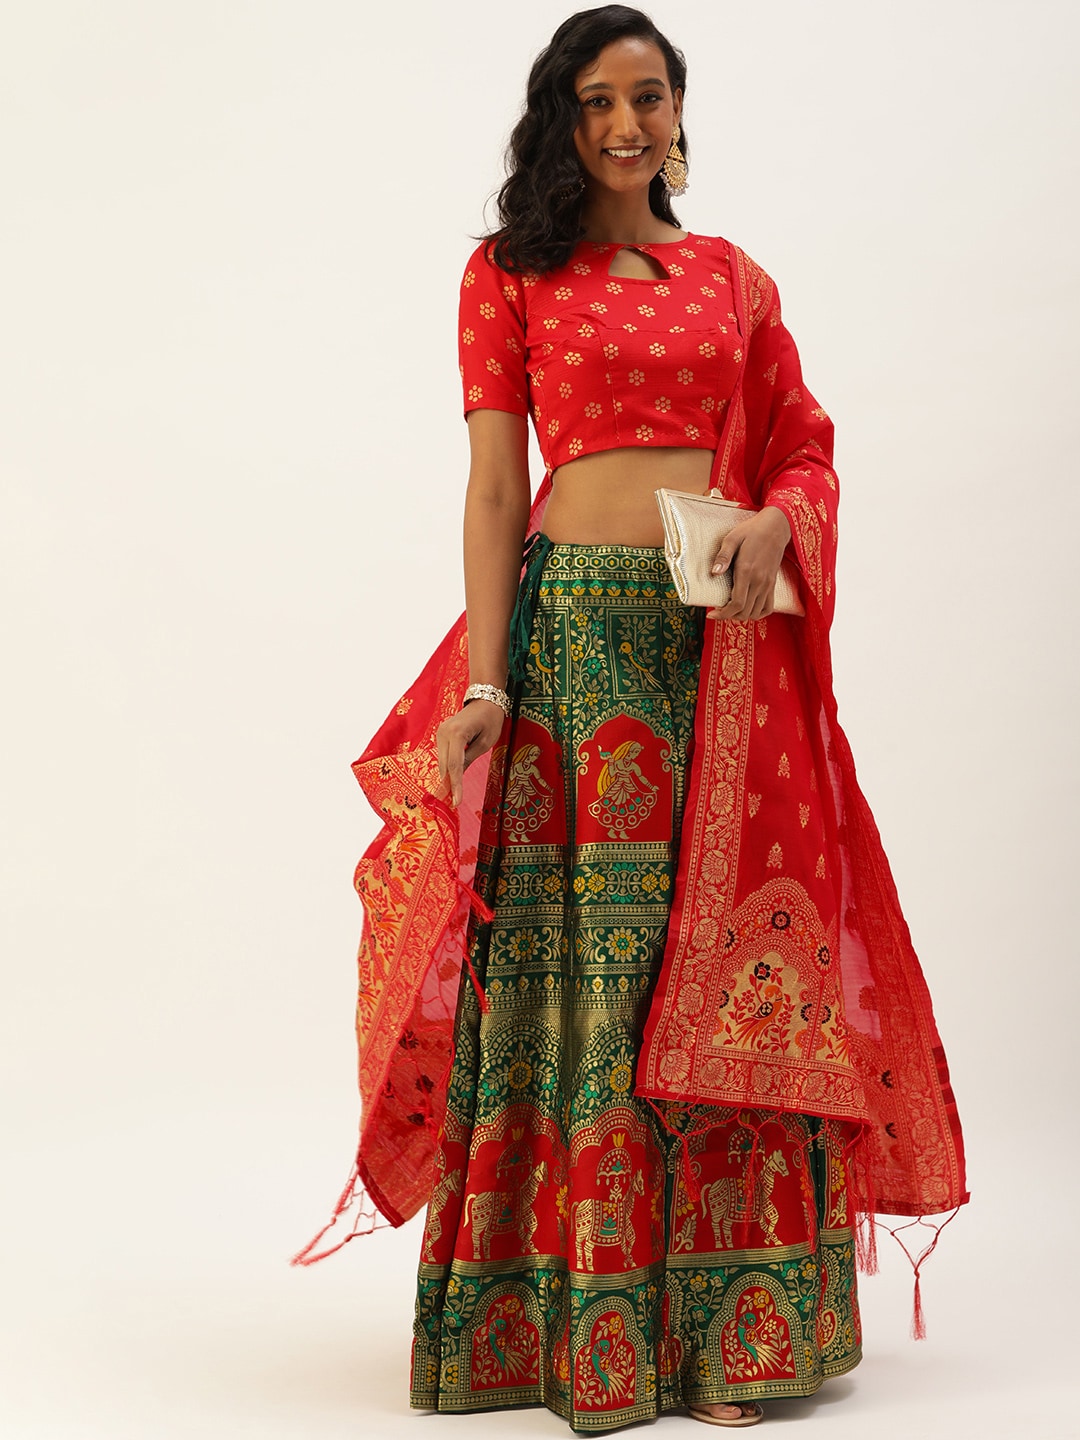 Pandadi Saree Green & Red Semi-Stitched Lehenga & Unstitched Blouse With Dupatta Price in India